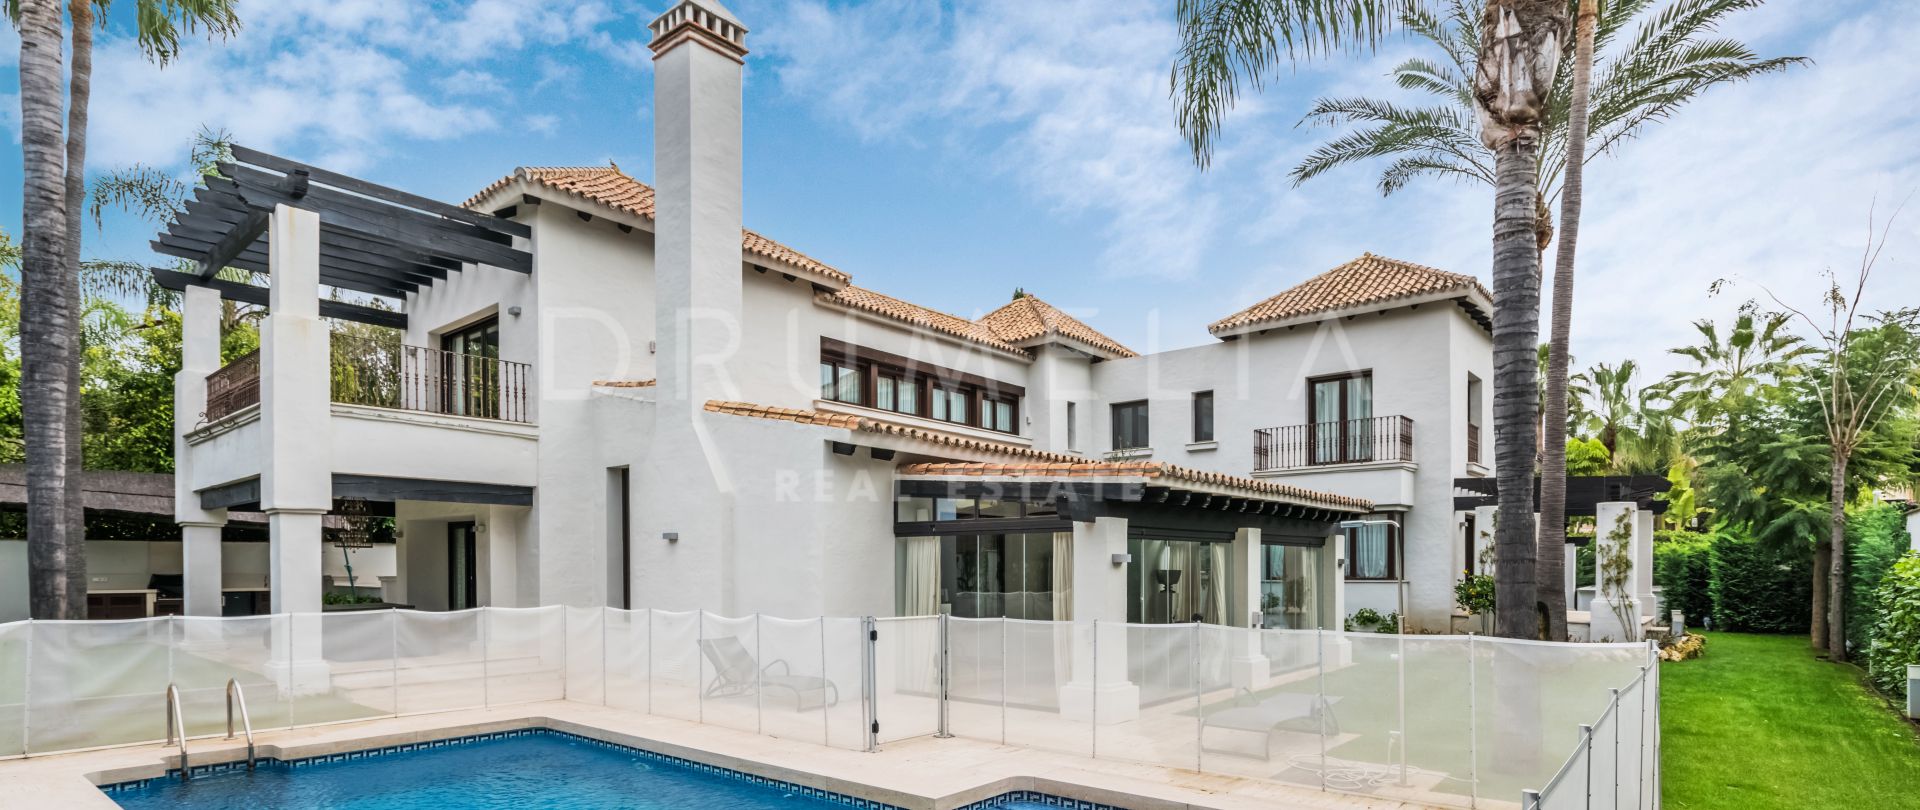 Magnifique villa moderne méditerranéenne de luxe, Marbella - Puerto Banus, Marbella